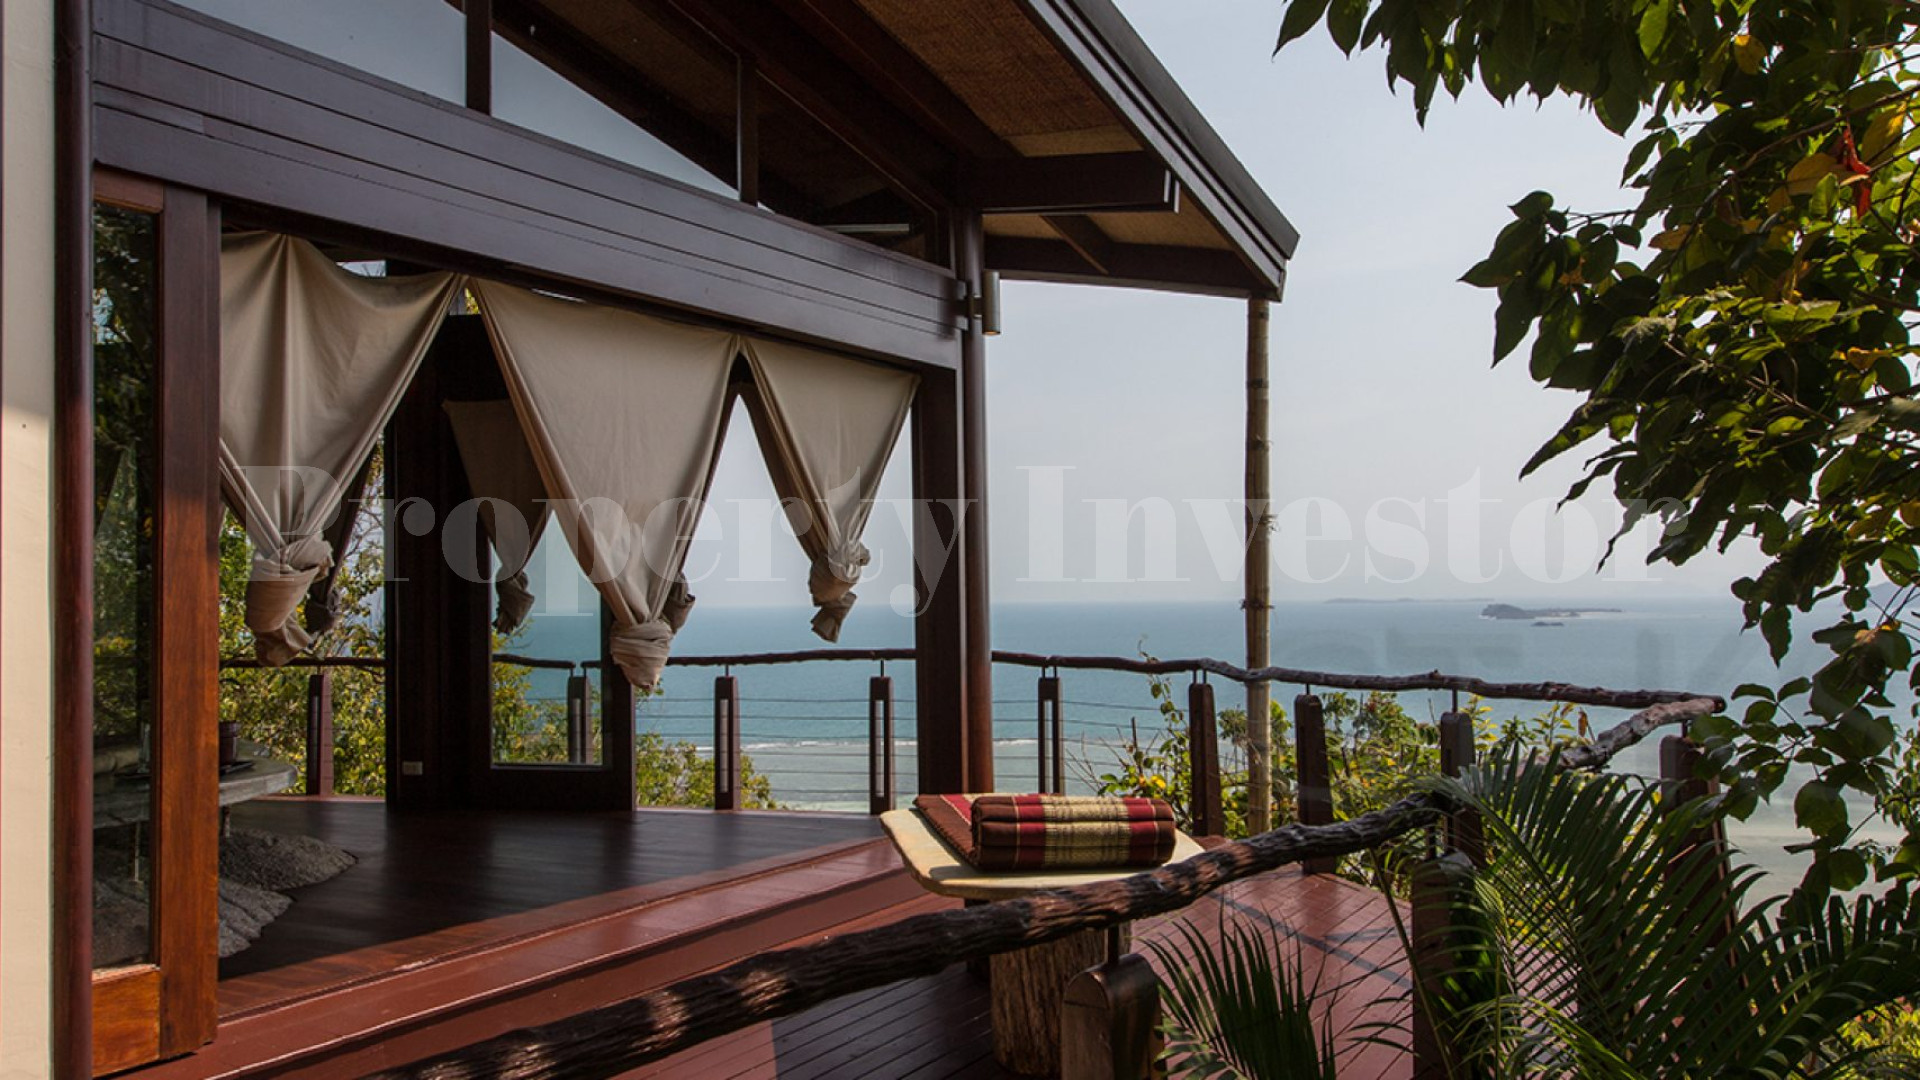 Unreal 3 Bedroom Tropical Luxury Hillside Villa with Waterfall in Koh Samui